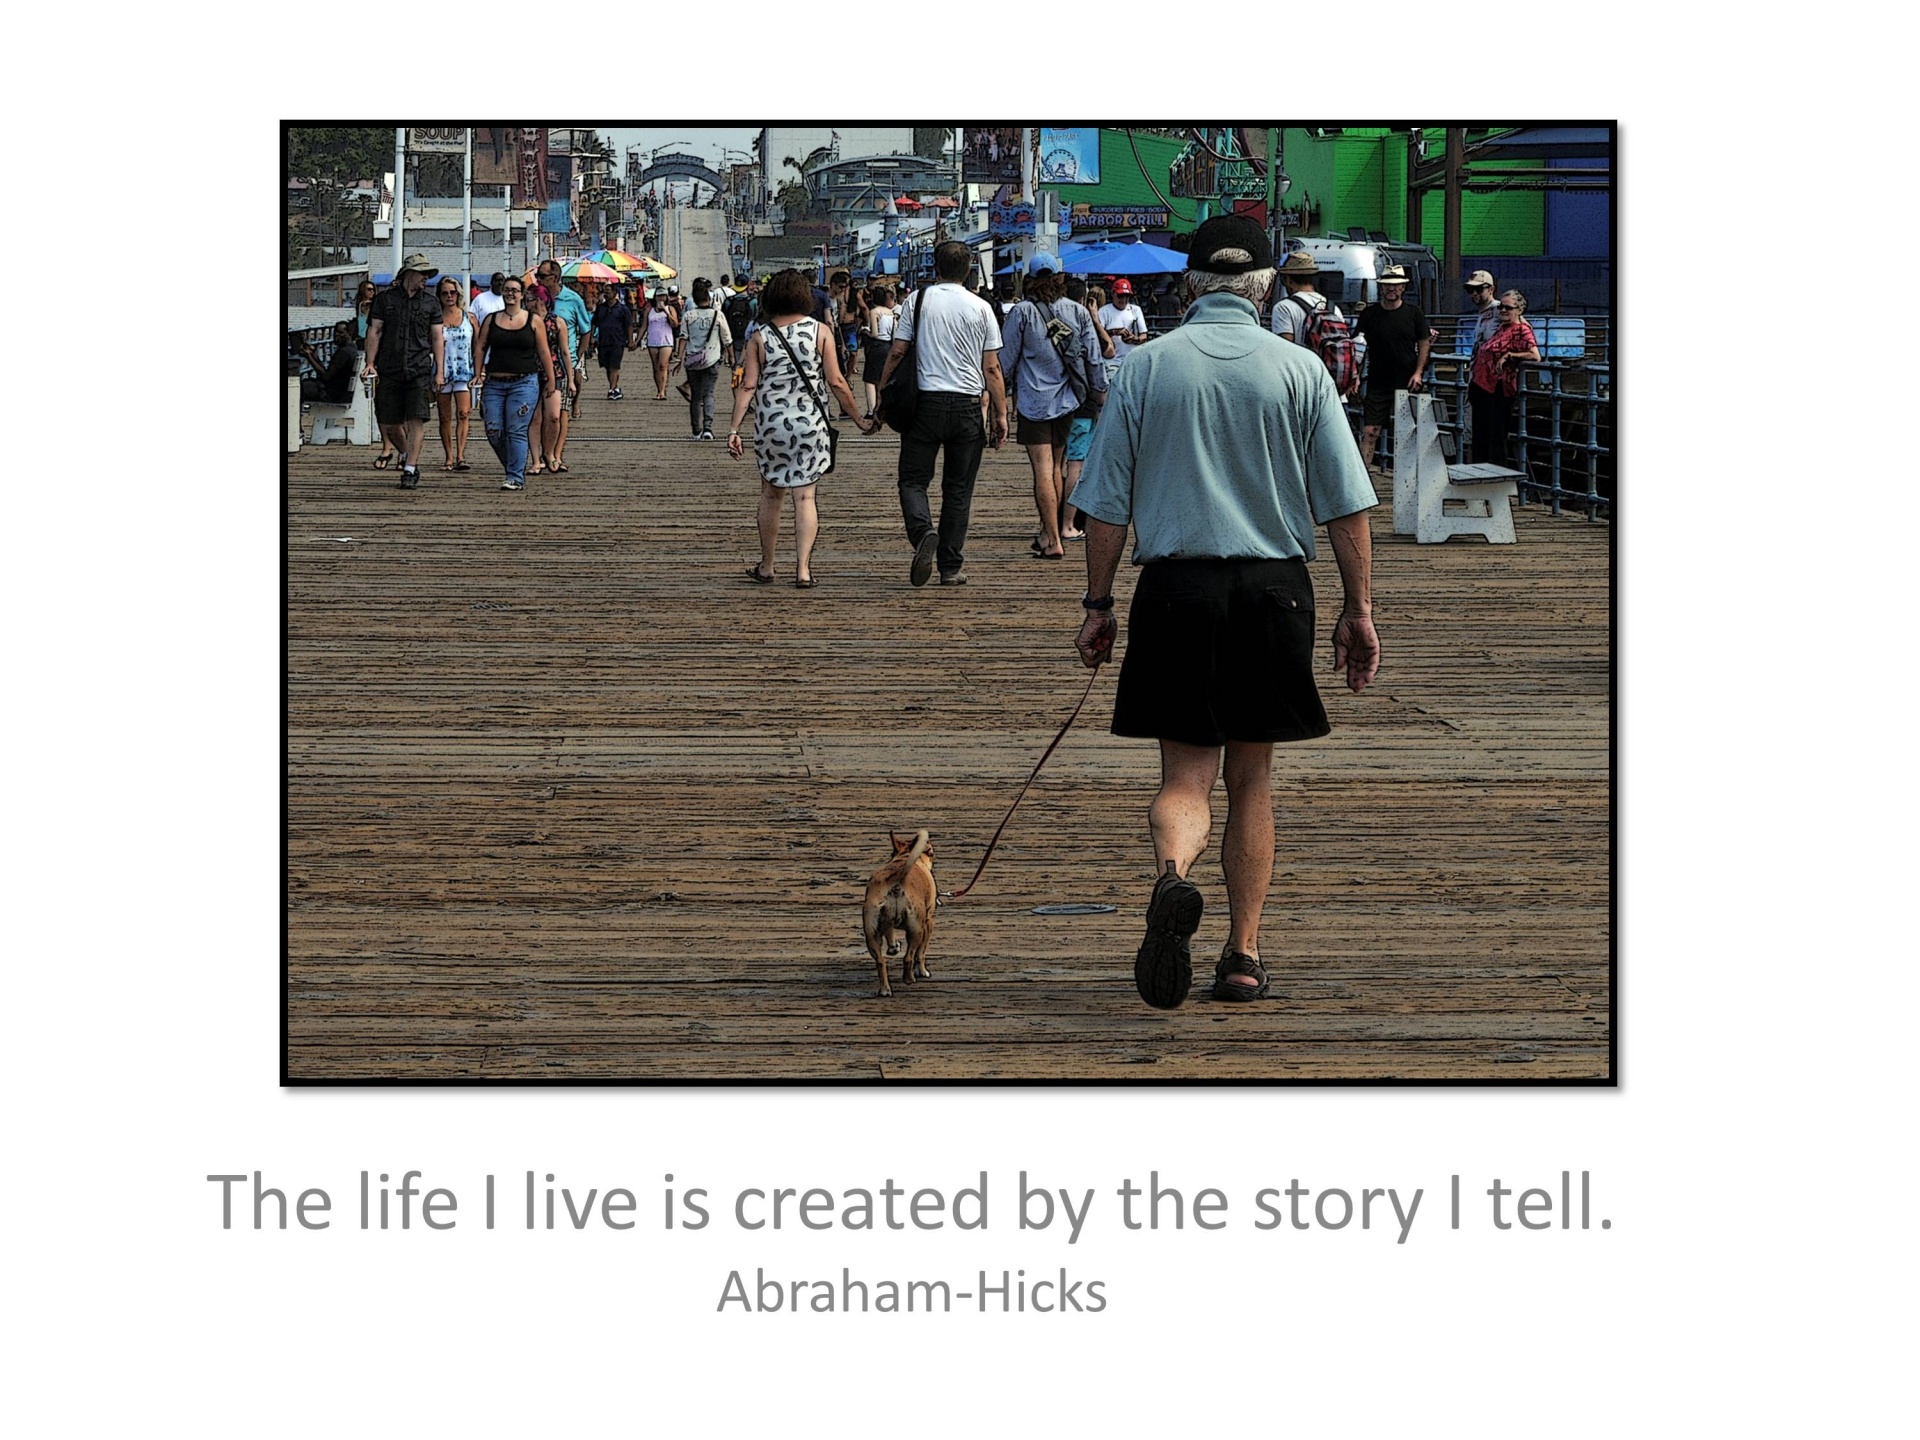 abraham-hicks quote inspirational quote free photo